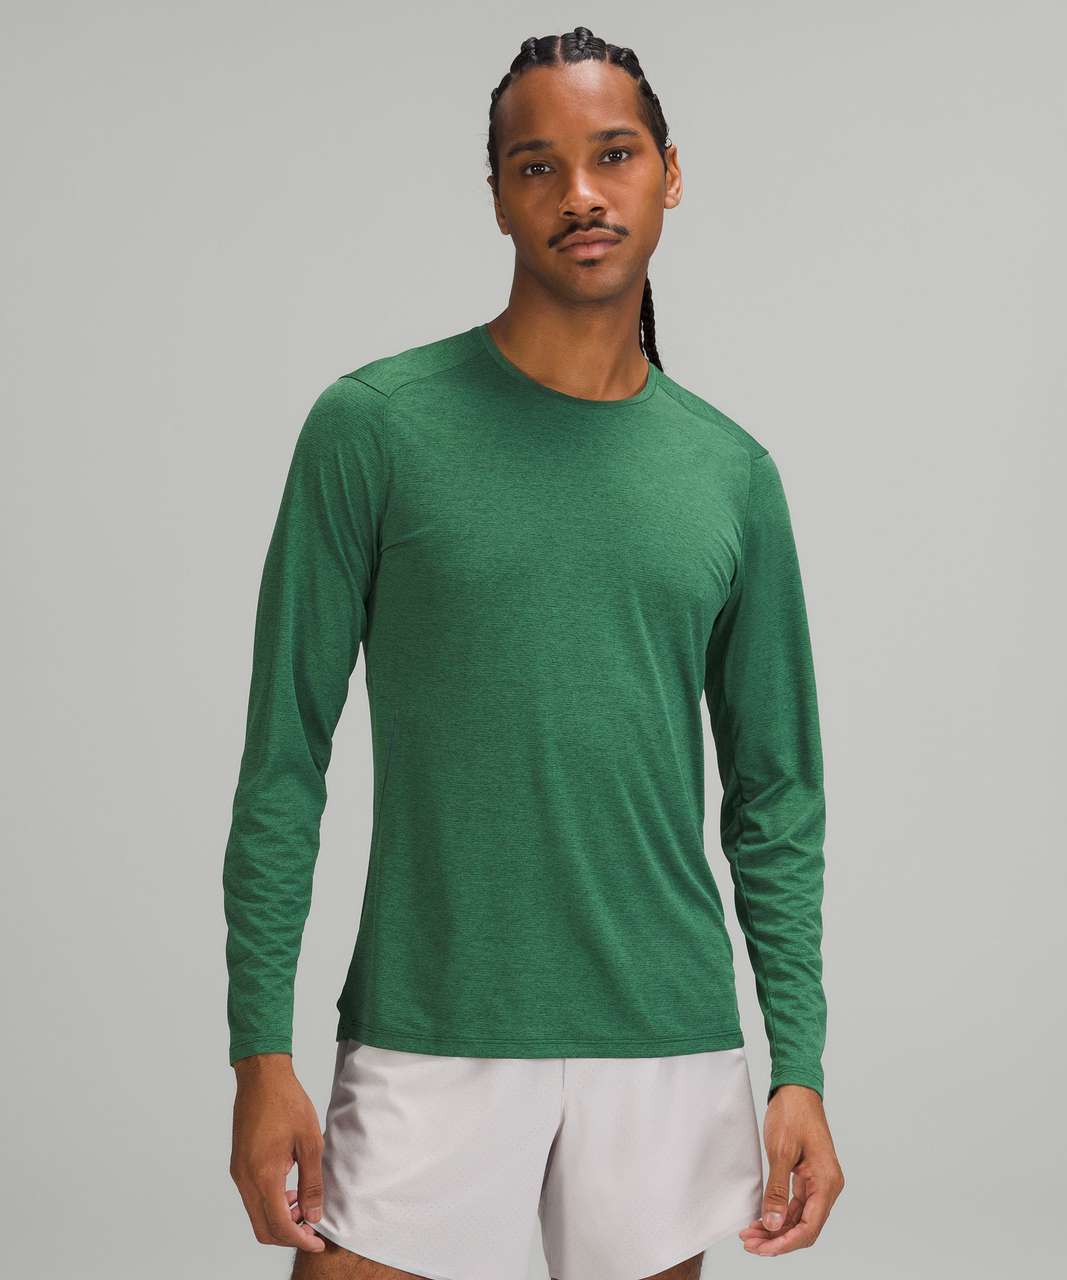 https://storage.googleapis.com/lulu-fanatics/product/71302/1280/lululemon-fast-and-free-long-sleeve-shirt-heathered-everglade-green-051410-382688.jpg